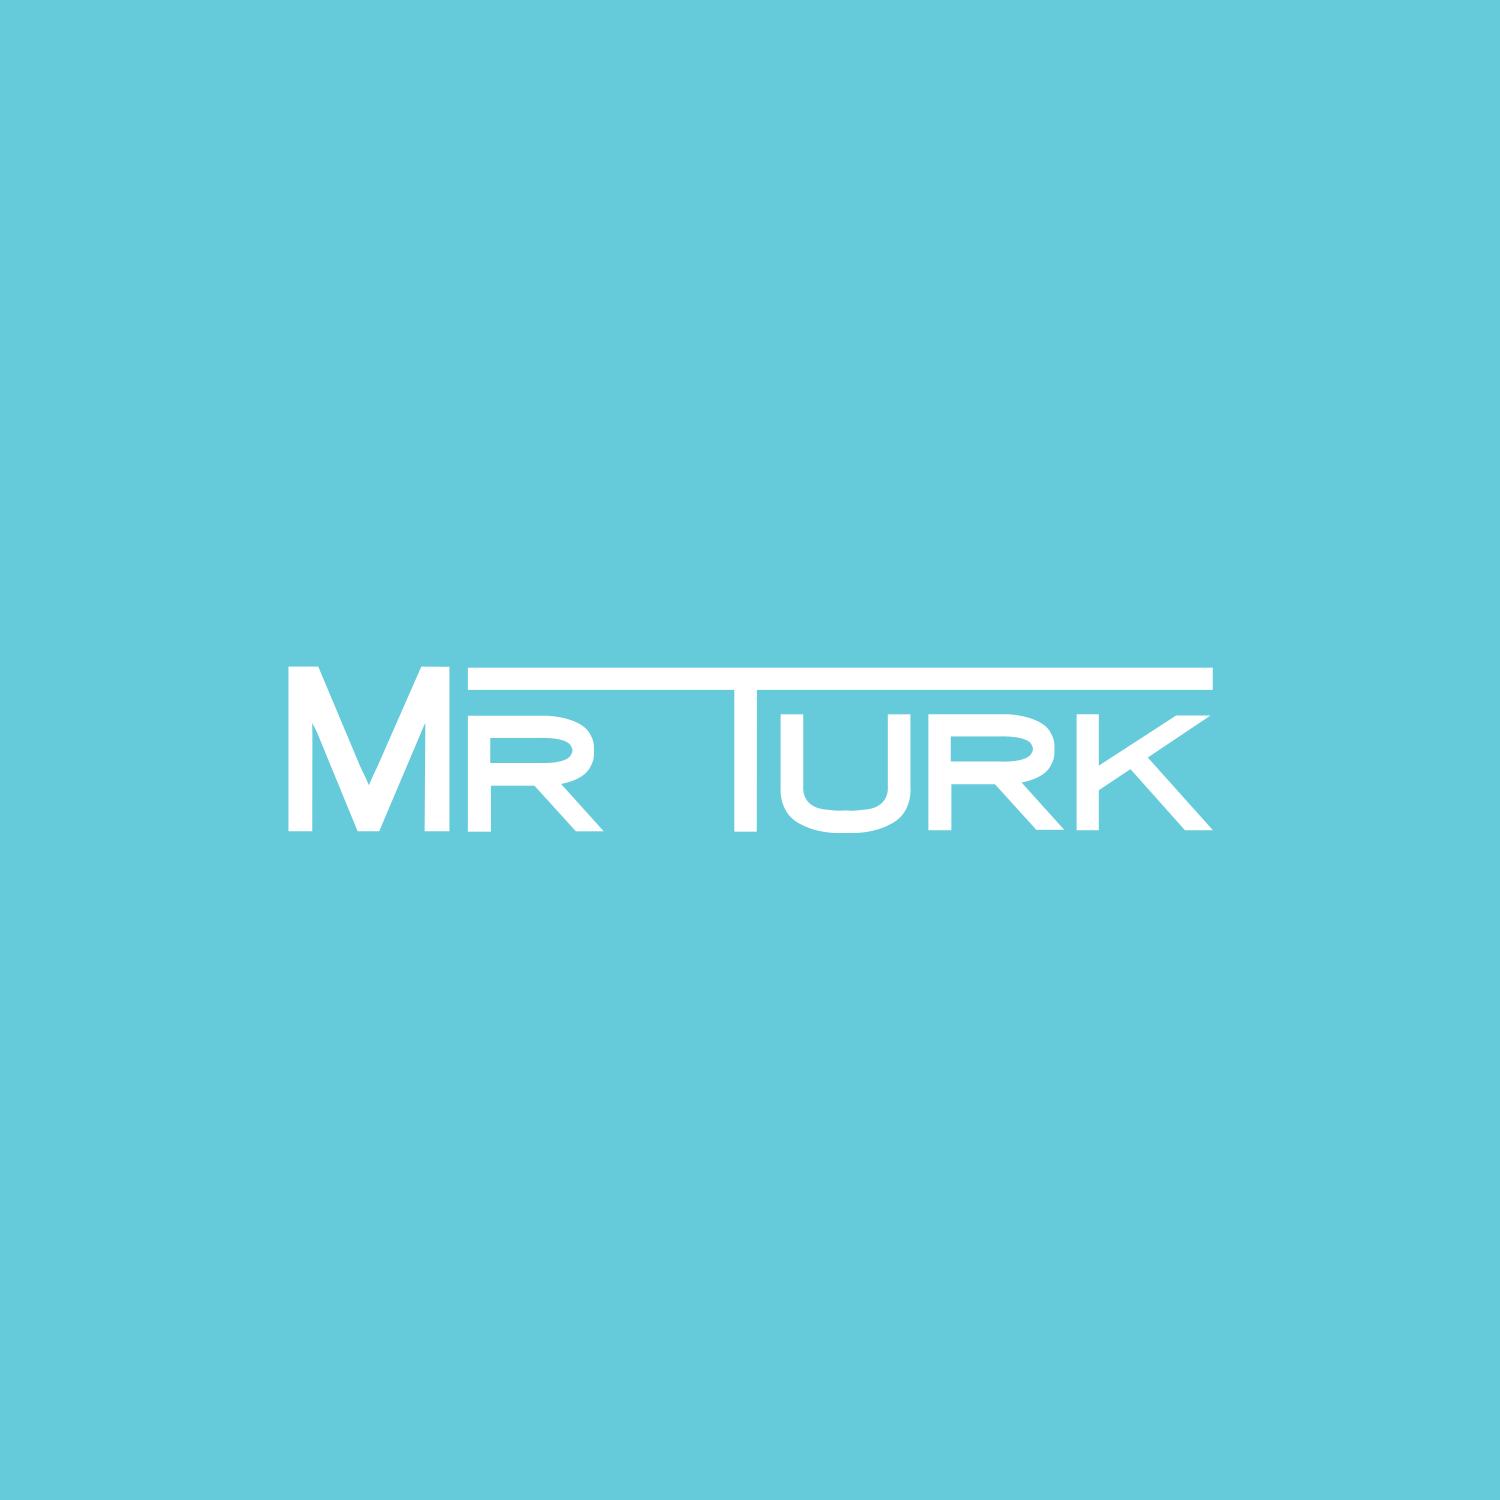 Mr Turk - Eyewear Logo - Blue Background